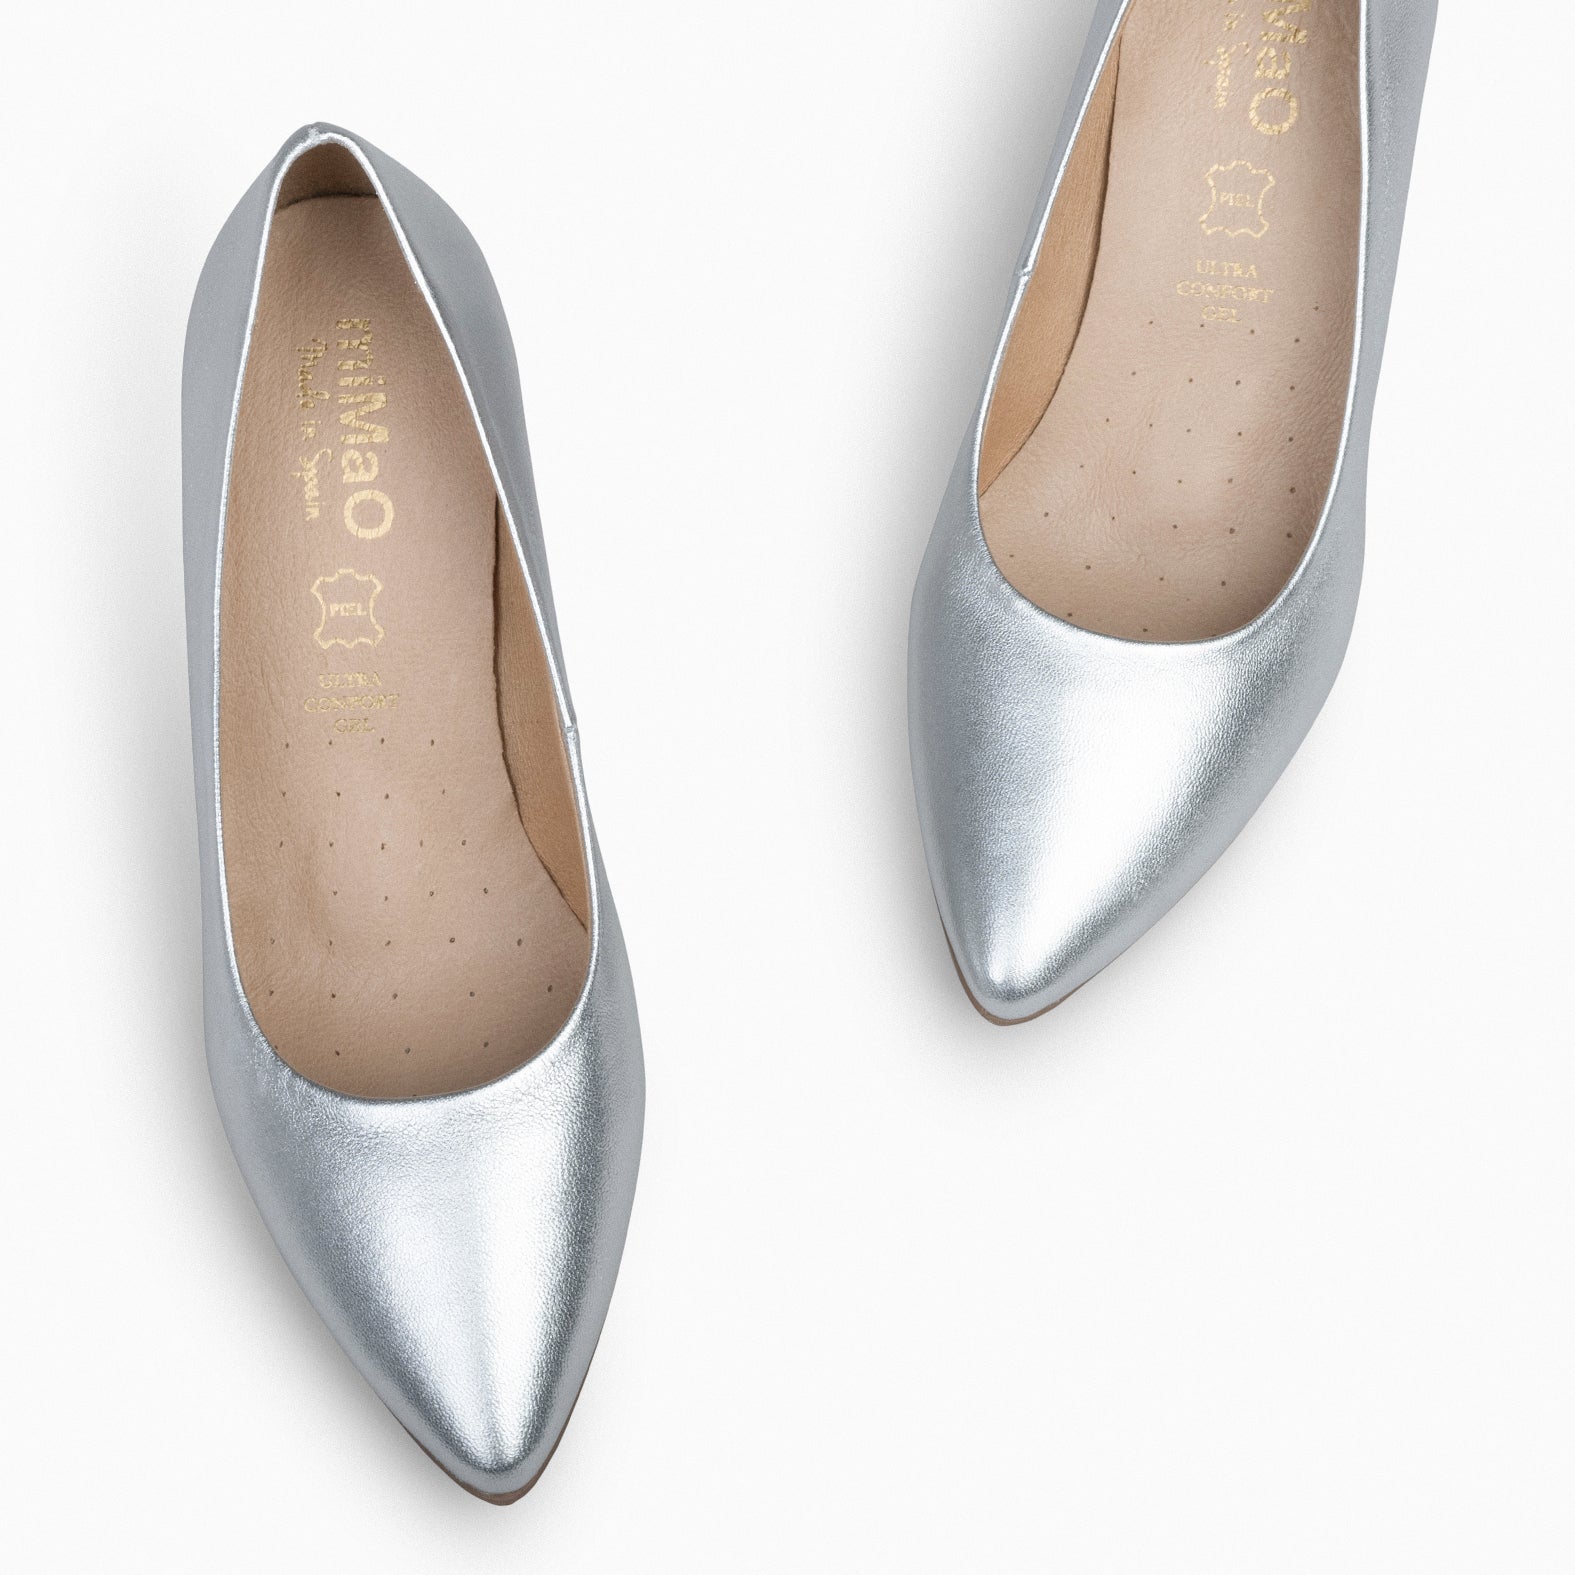 URBAN S SPLASH – SILVER metallic leather mid heels